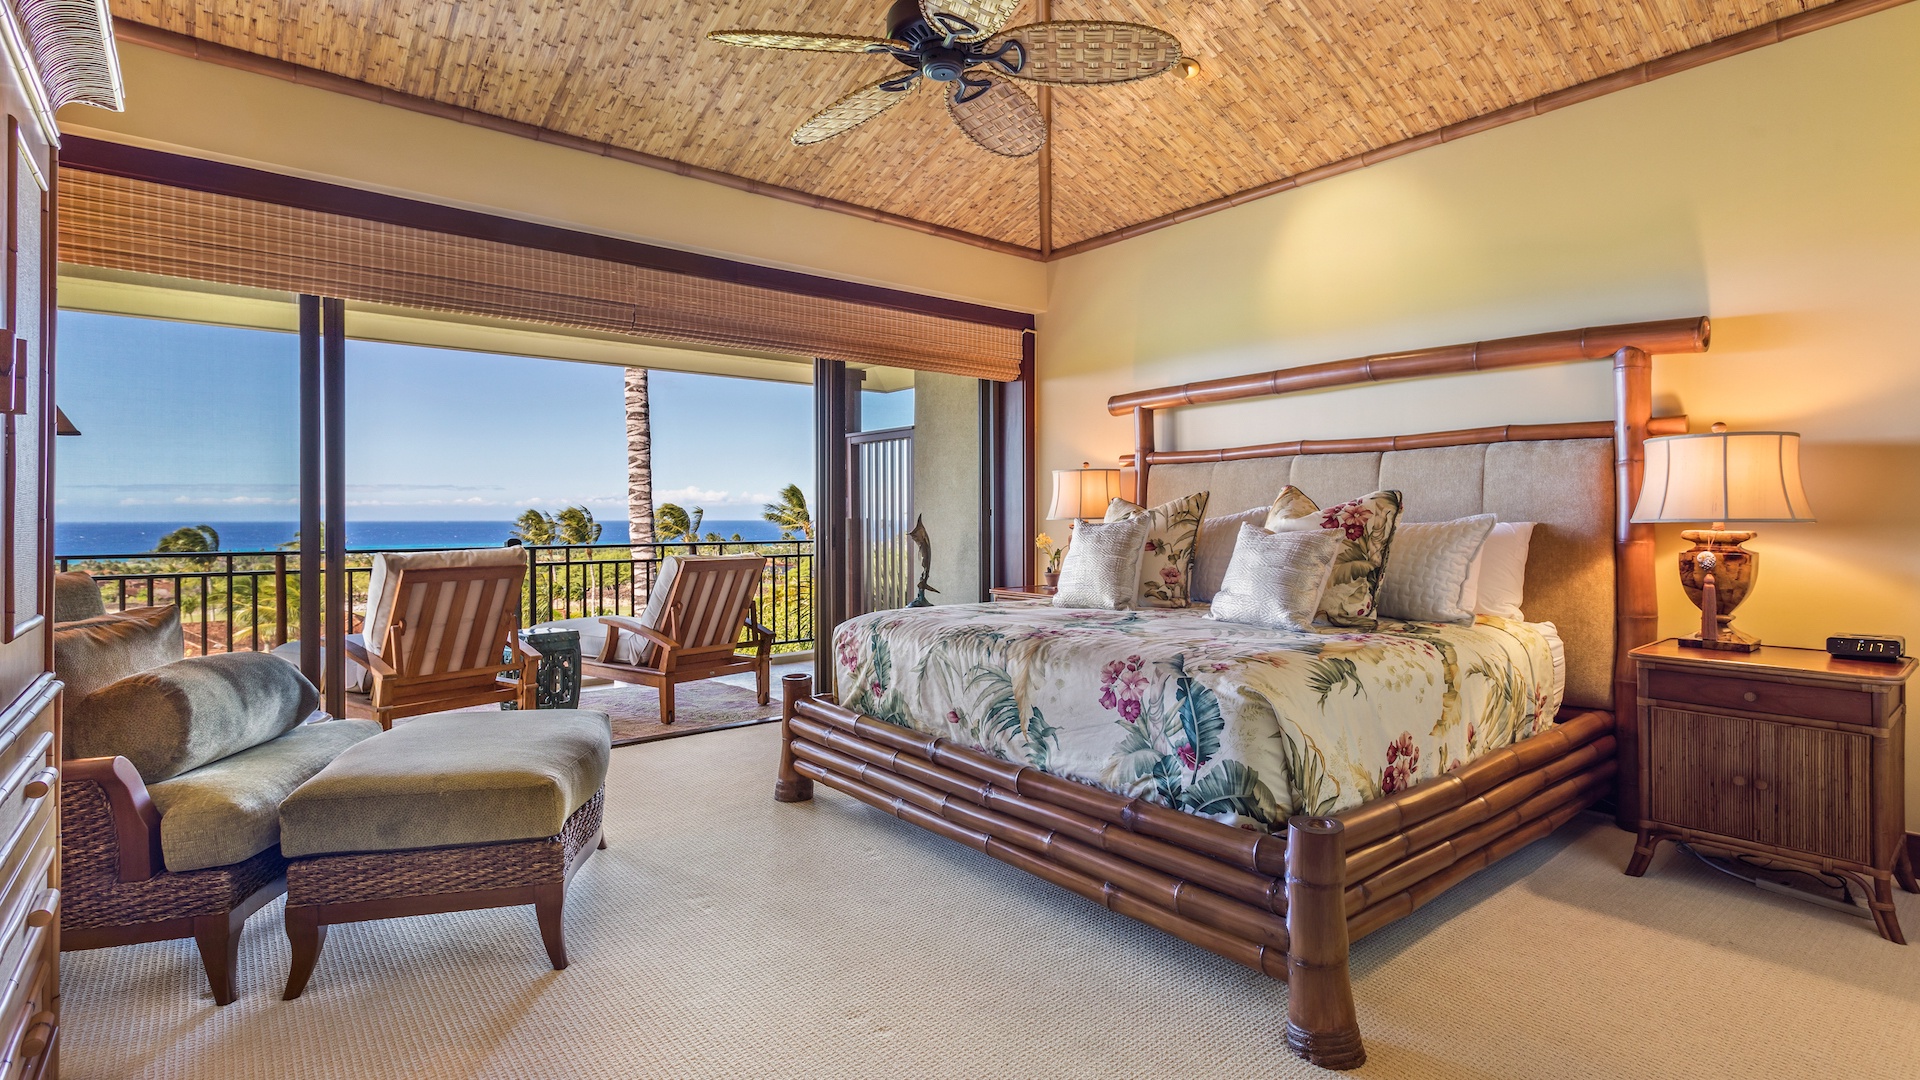 Kailua Kona Vacation Rentals, 2BD Hainoa Villa (2907B) at Four Seasons Resort at Hualalai - Primary Bedroom Suite with King Bed, Private Lanai, Flatscreen TV & Ensuite Bath